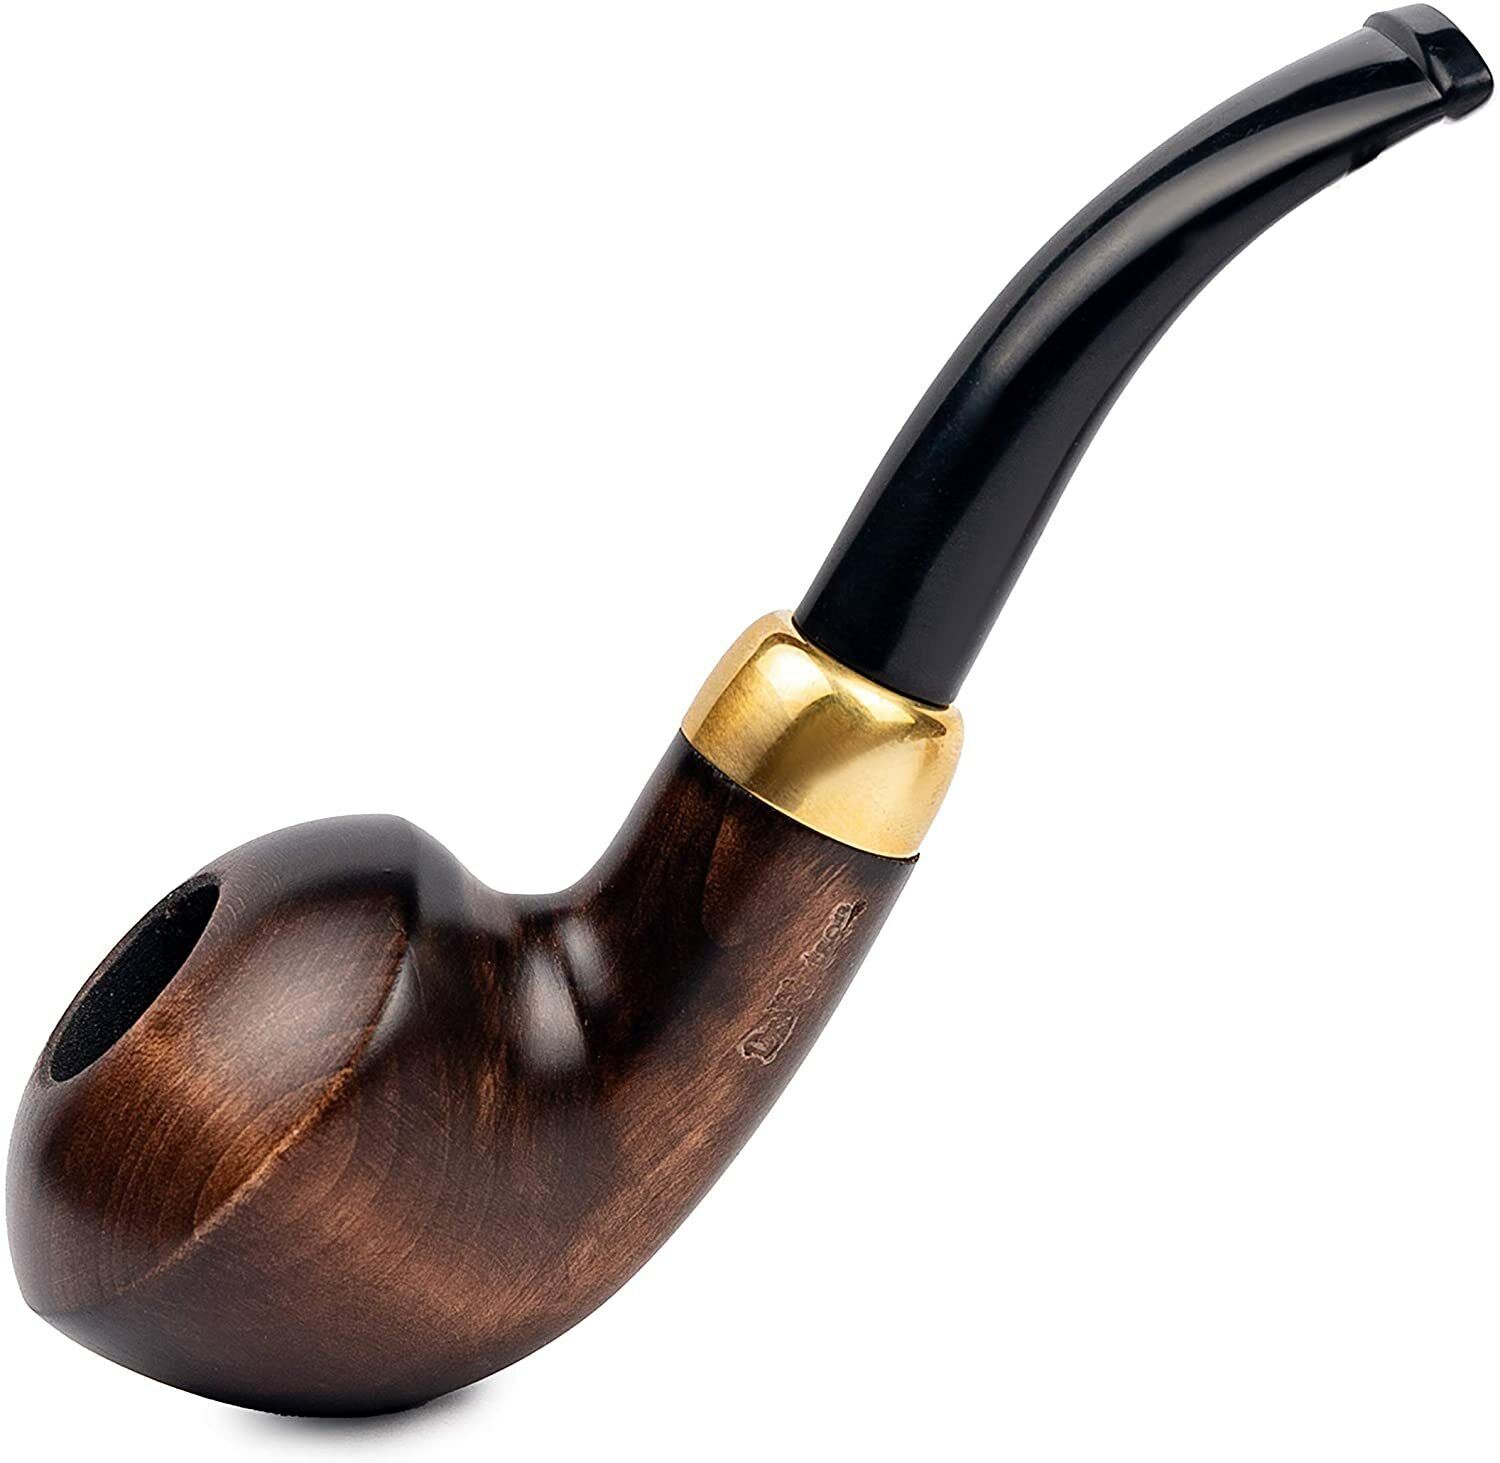 Dr. Watson - Wooden Tobacco Smoking Pipe, Classic Ukulele Shape (Brown)